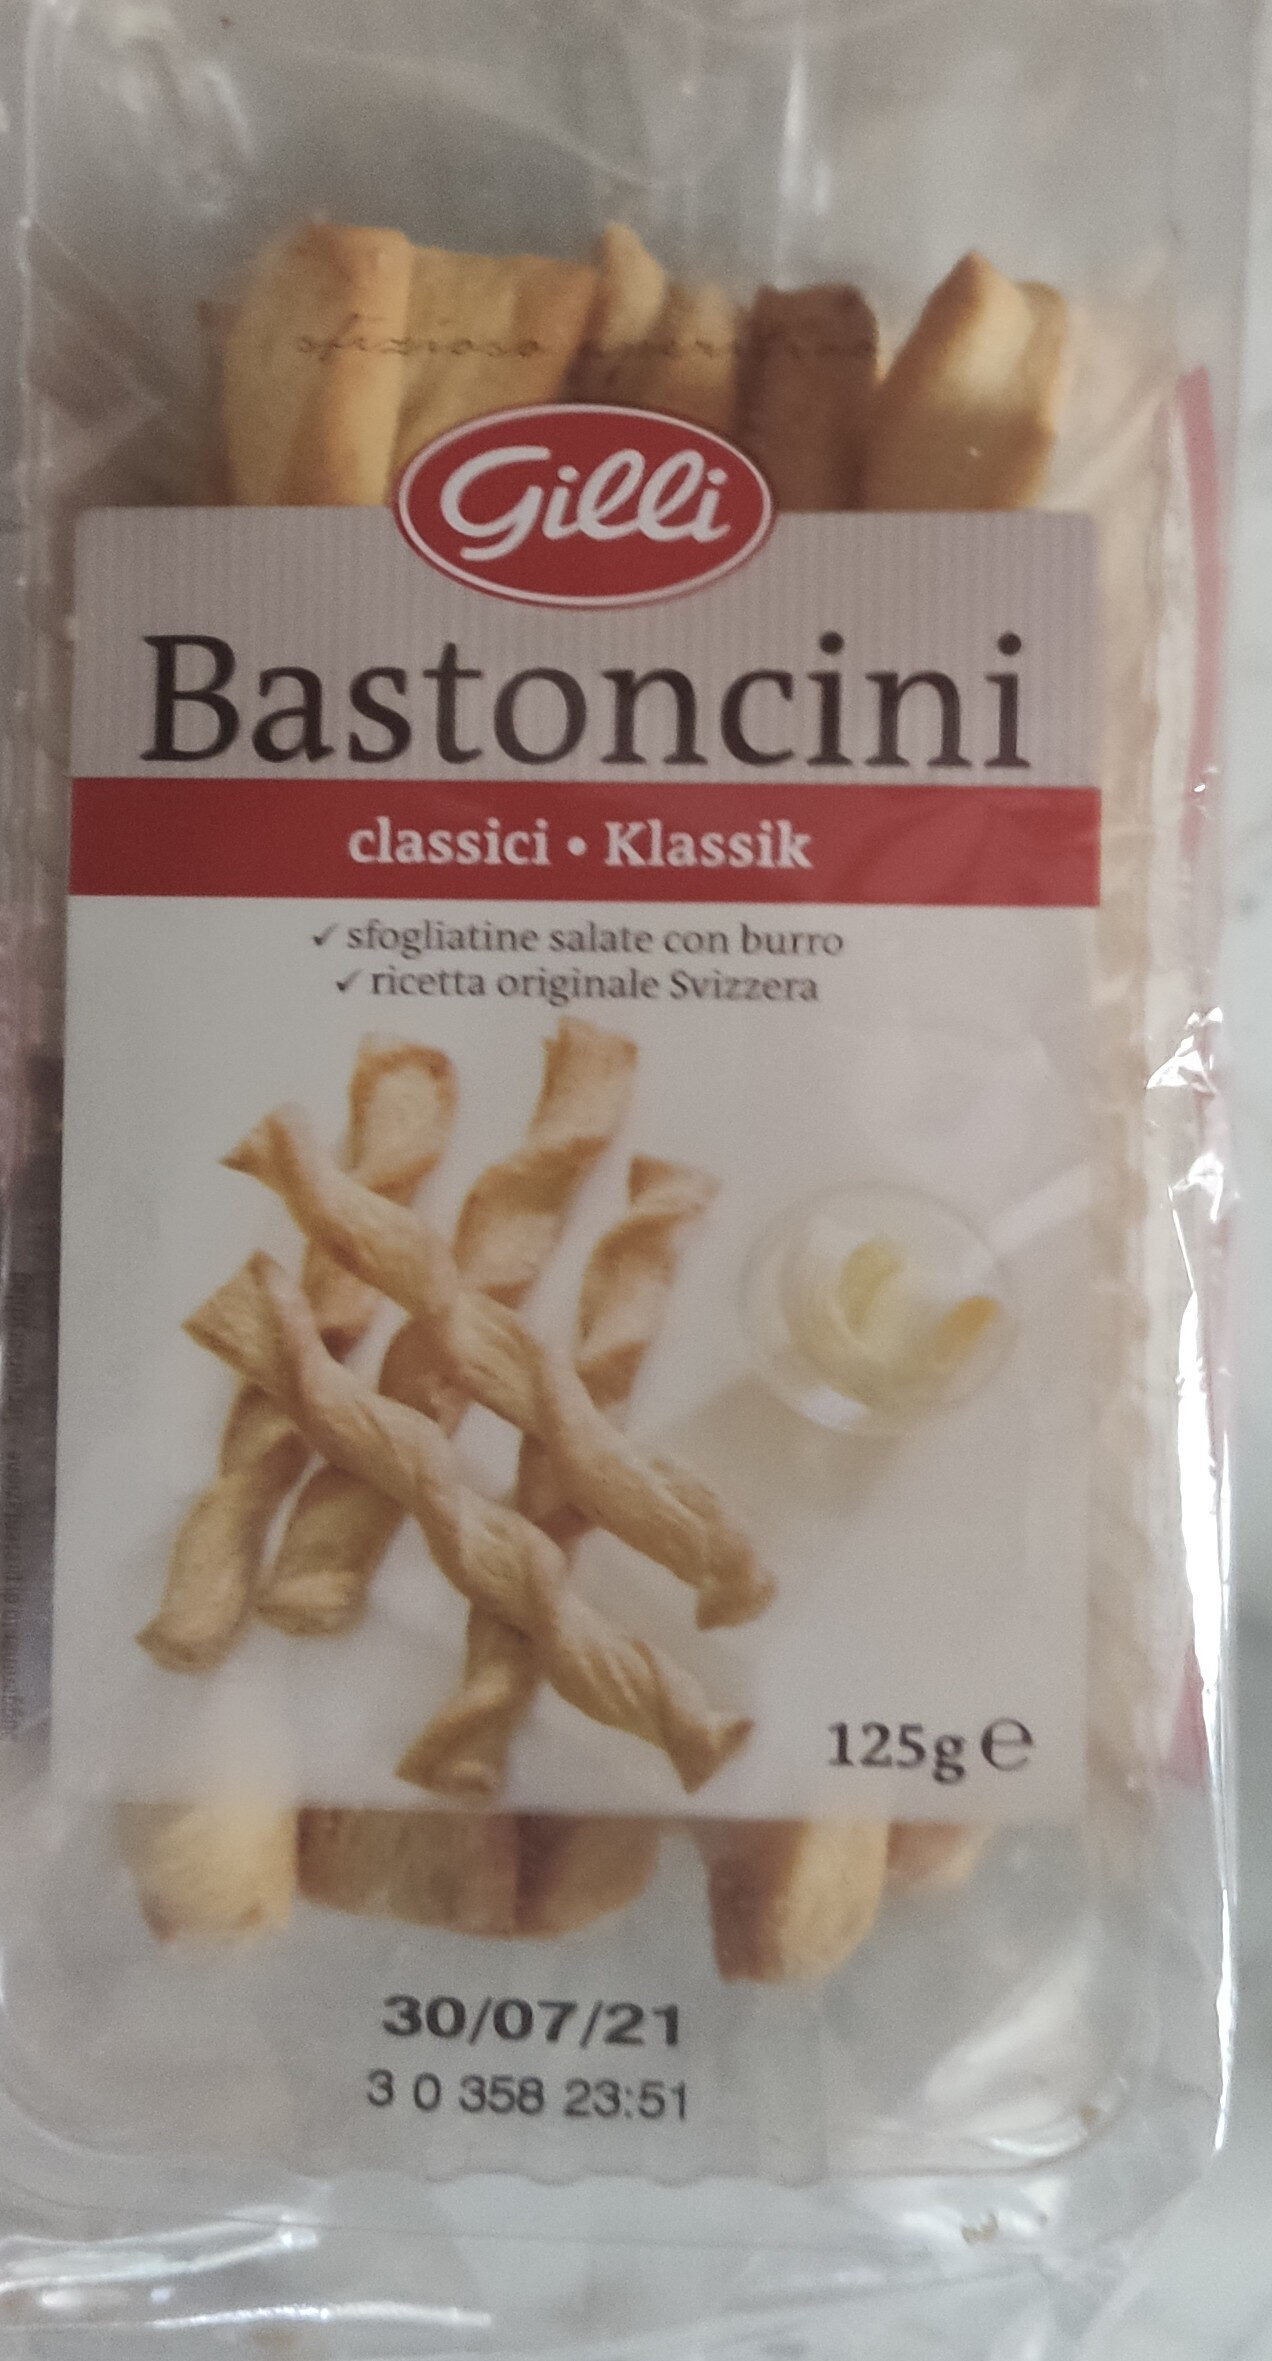 Bastoncini - Product - it